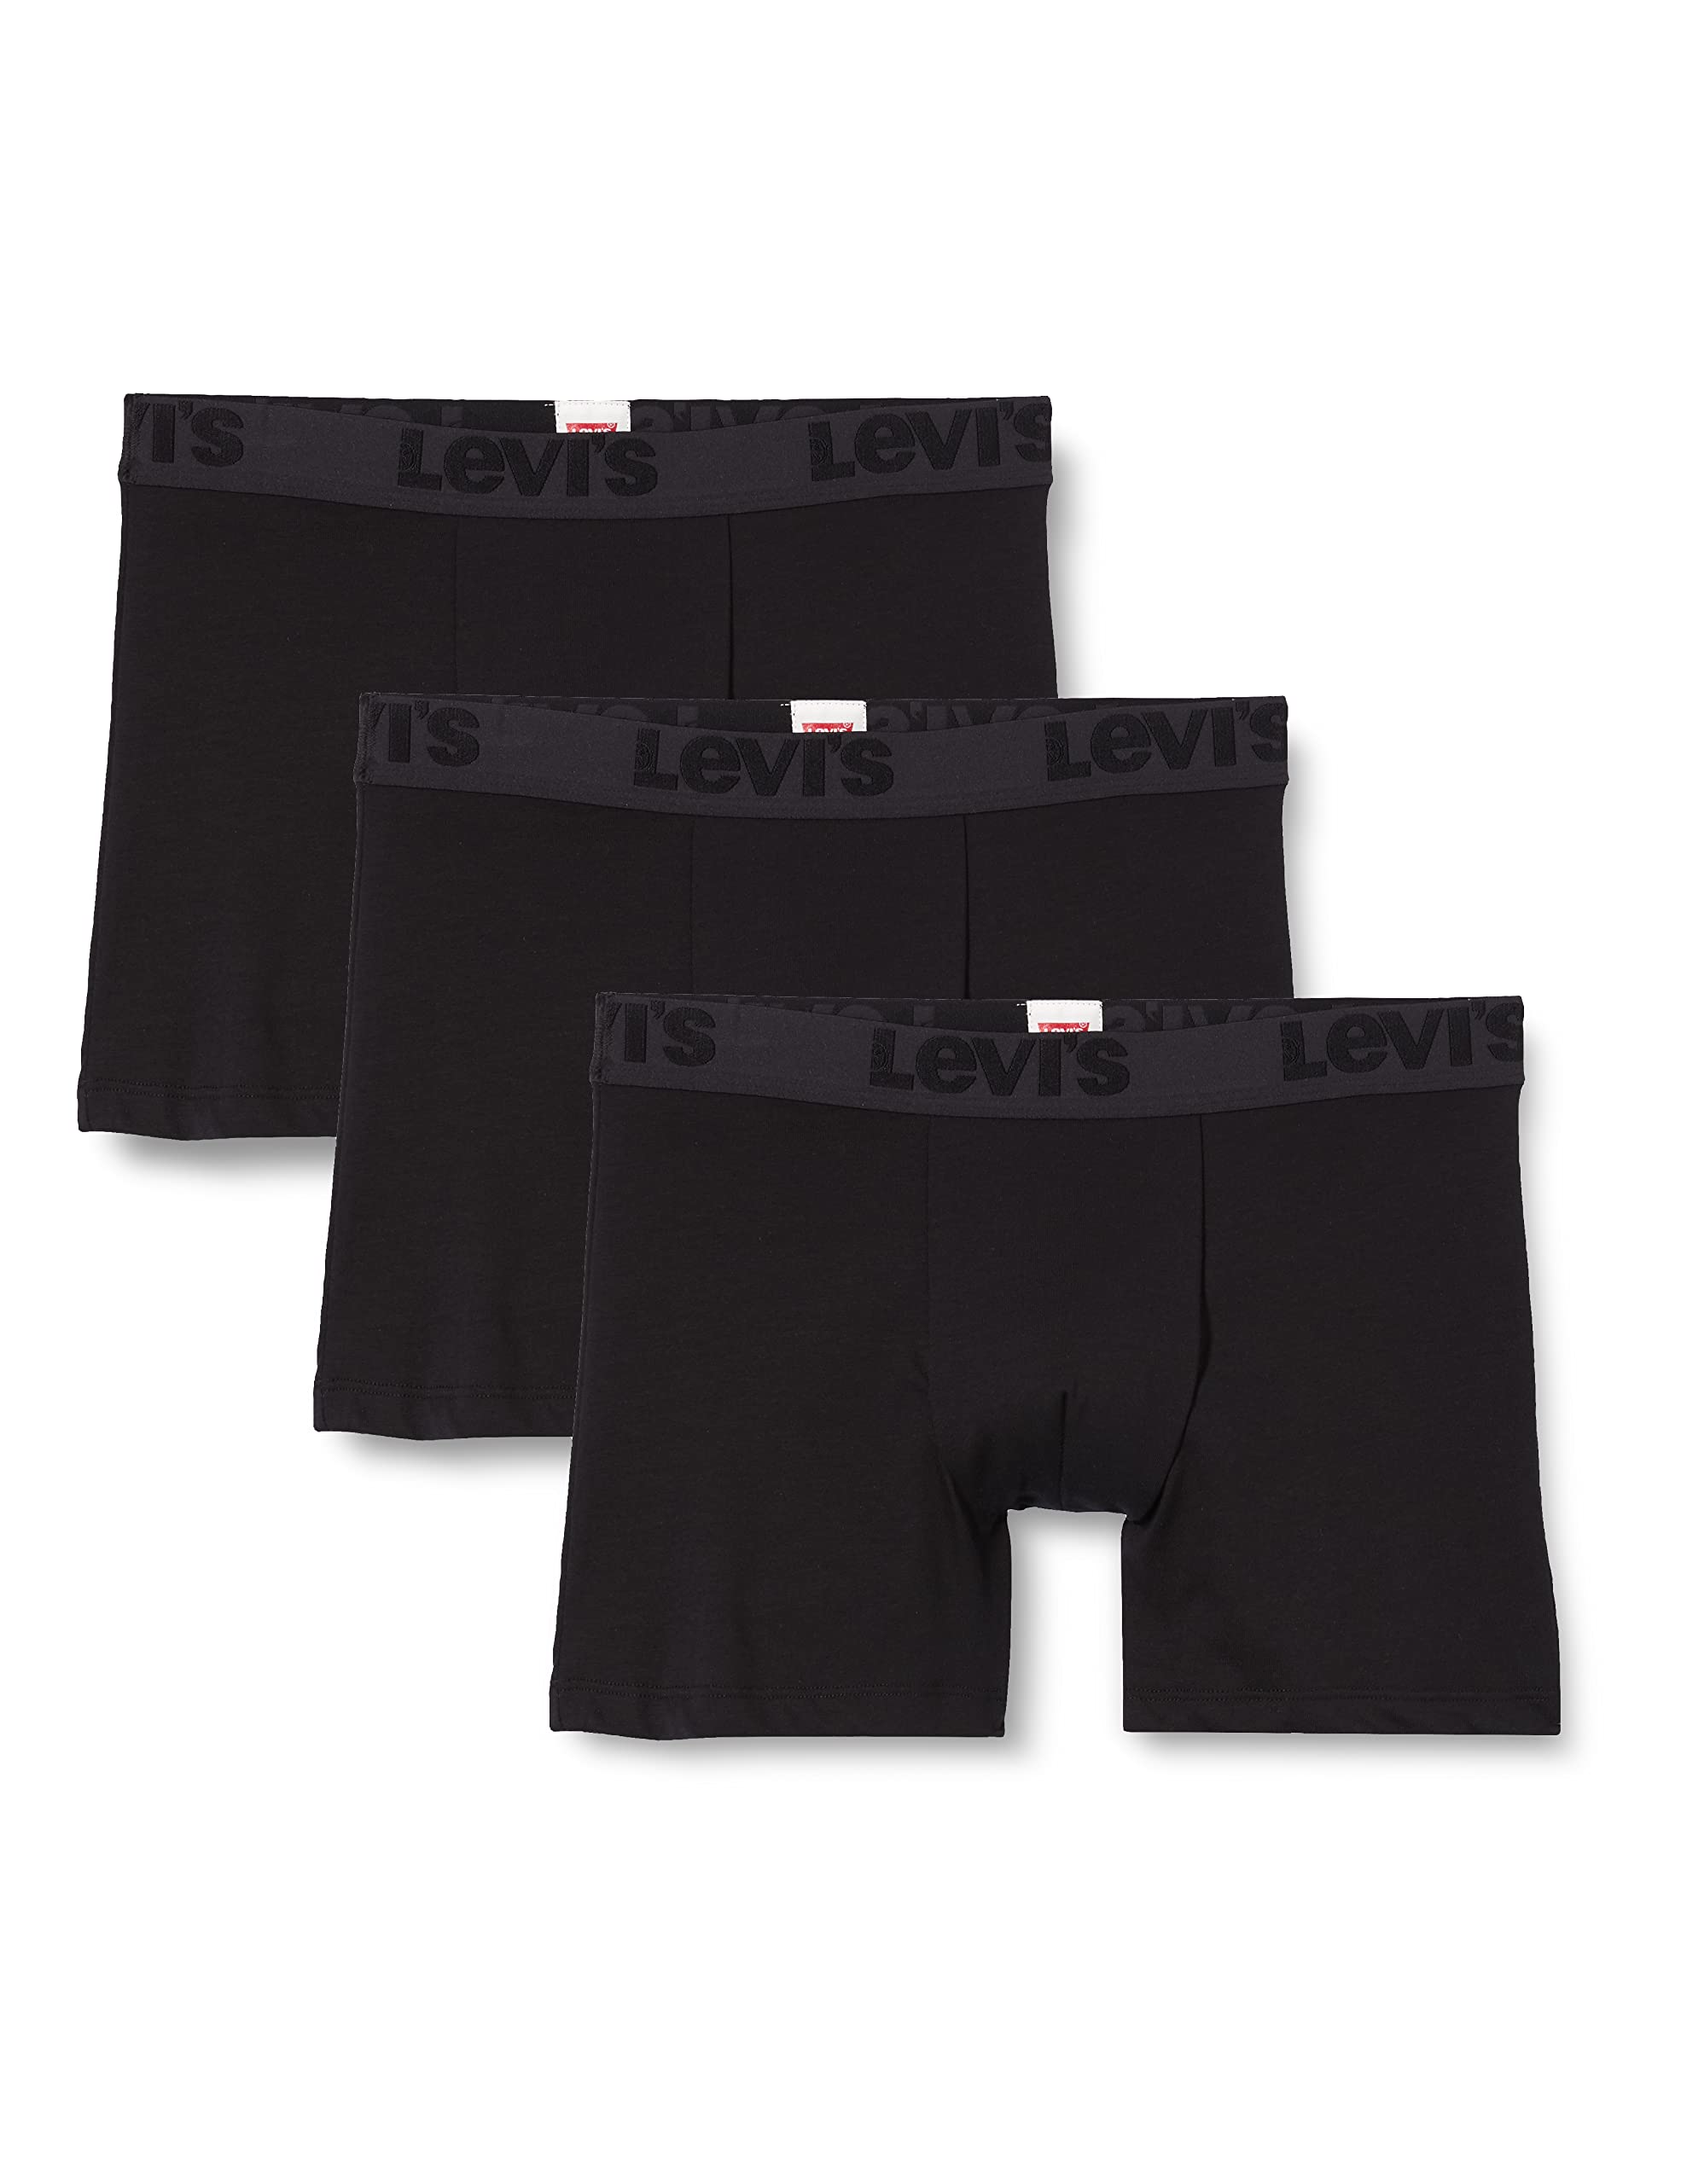 Levi's Herren Levi's Premium Men's Boxer Briefs (3 pack) Boxer Shorts, Schwarz, XXL